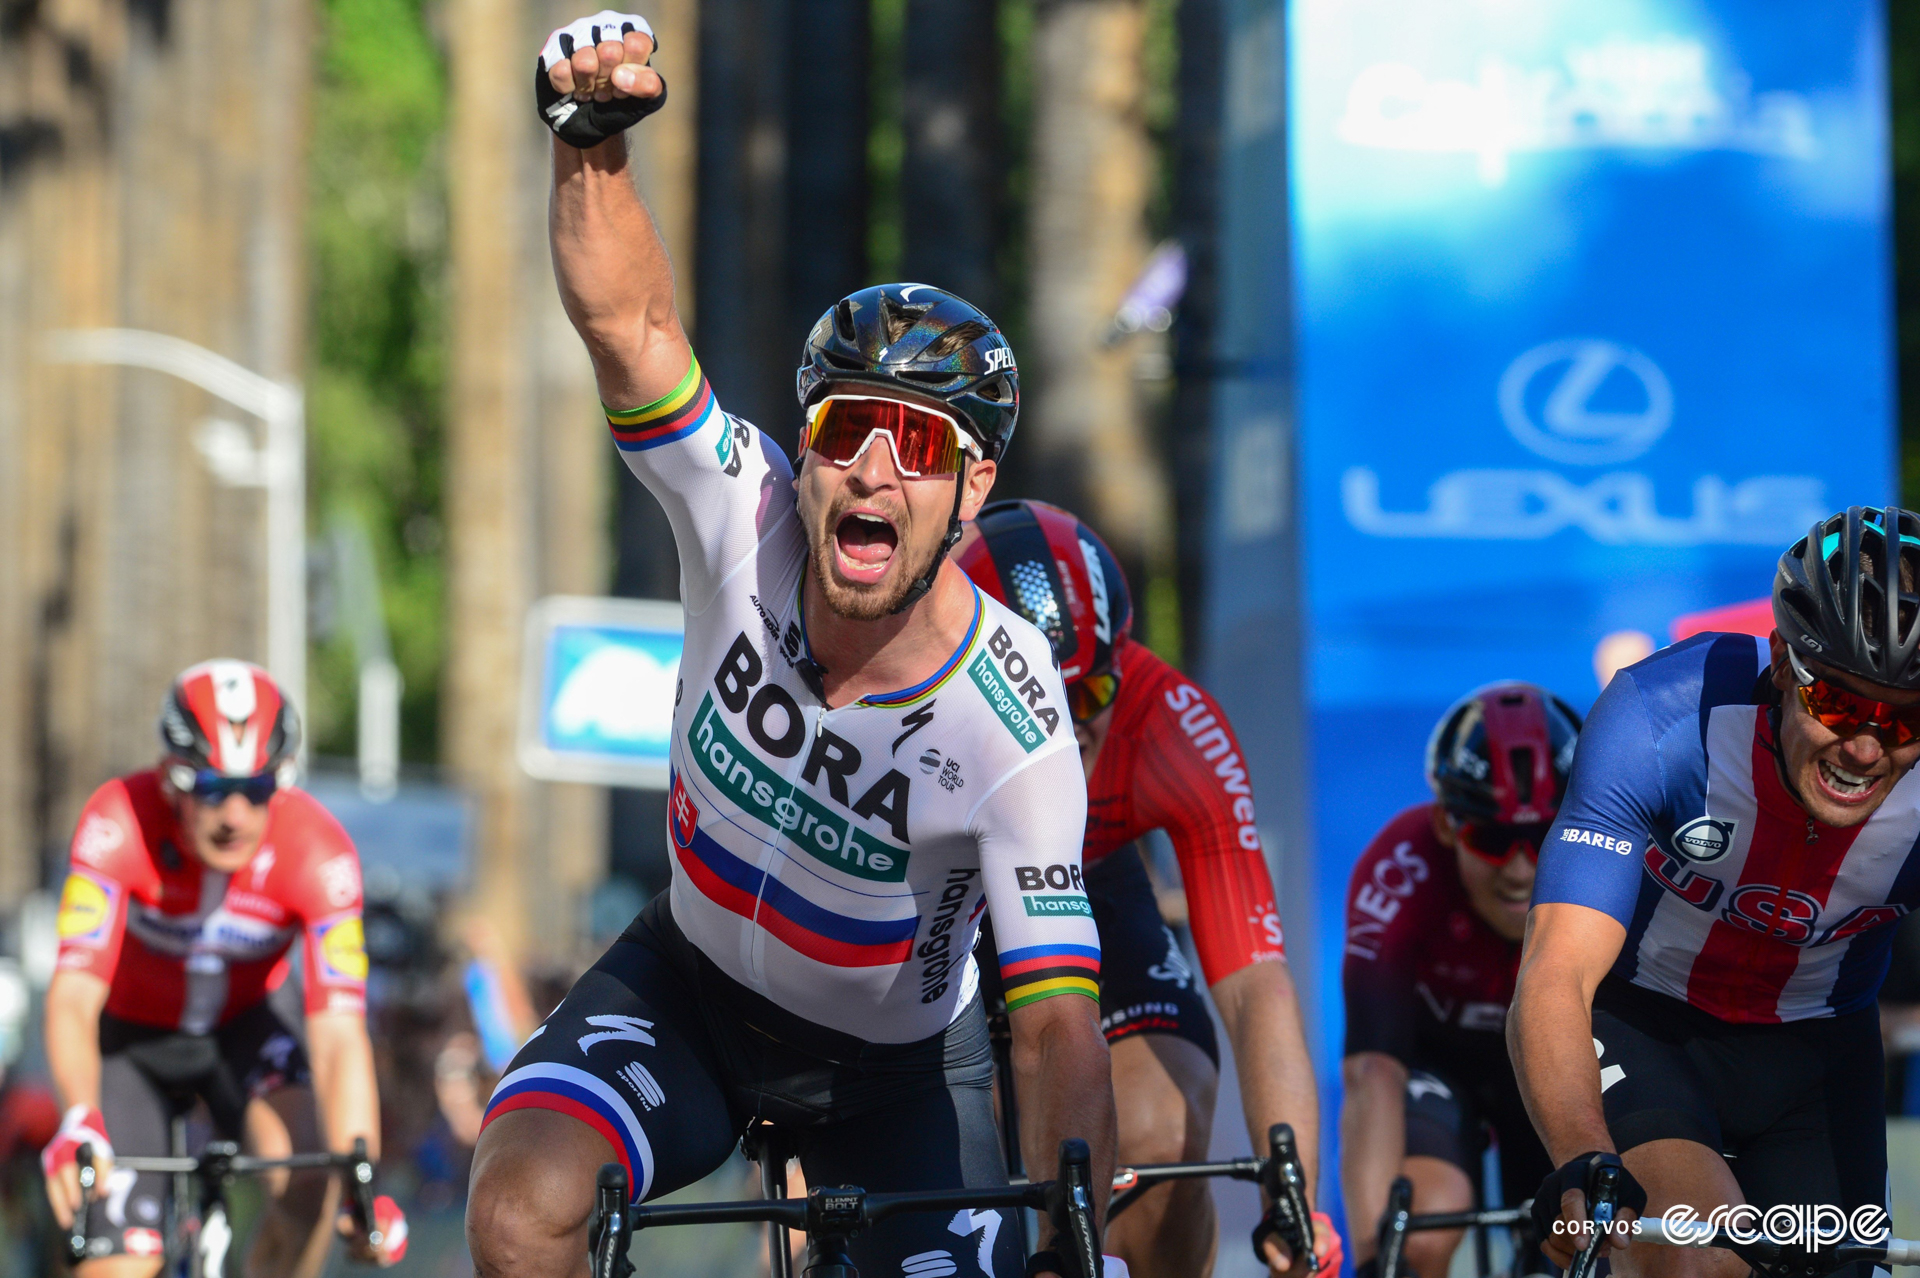 Peter Sagan celebrates winning a stage at the 2019 Tour of California.